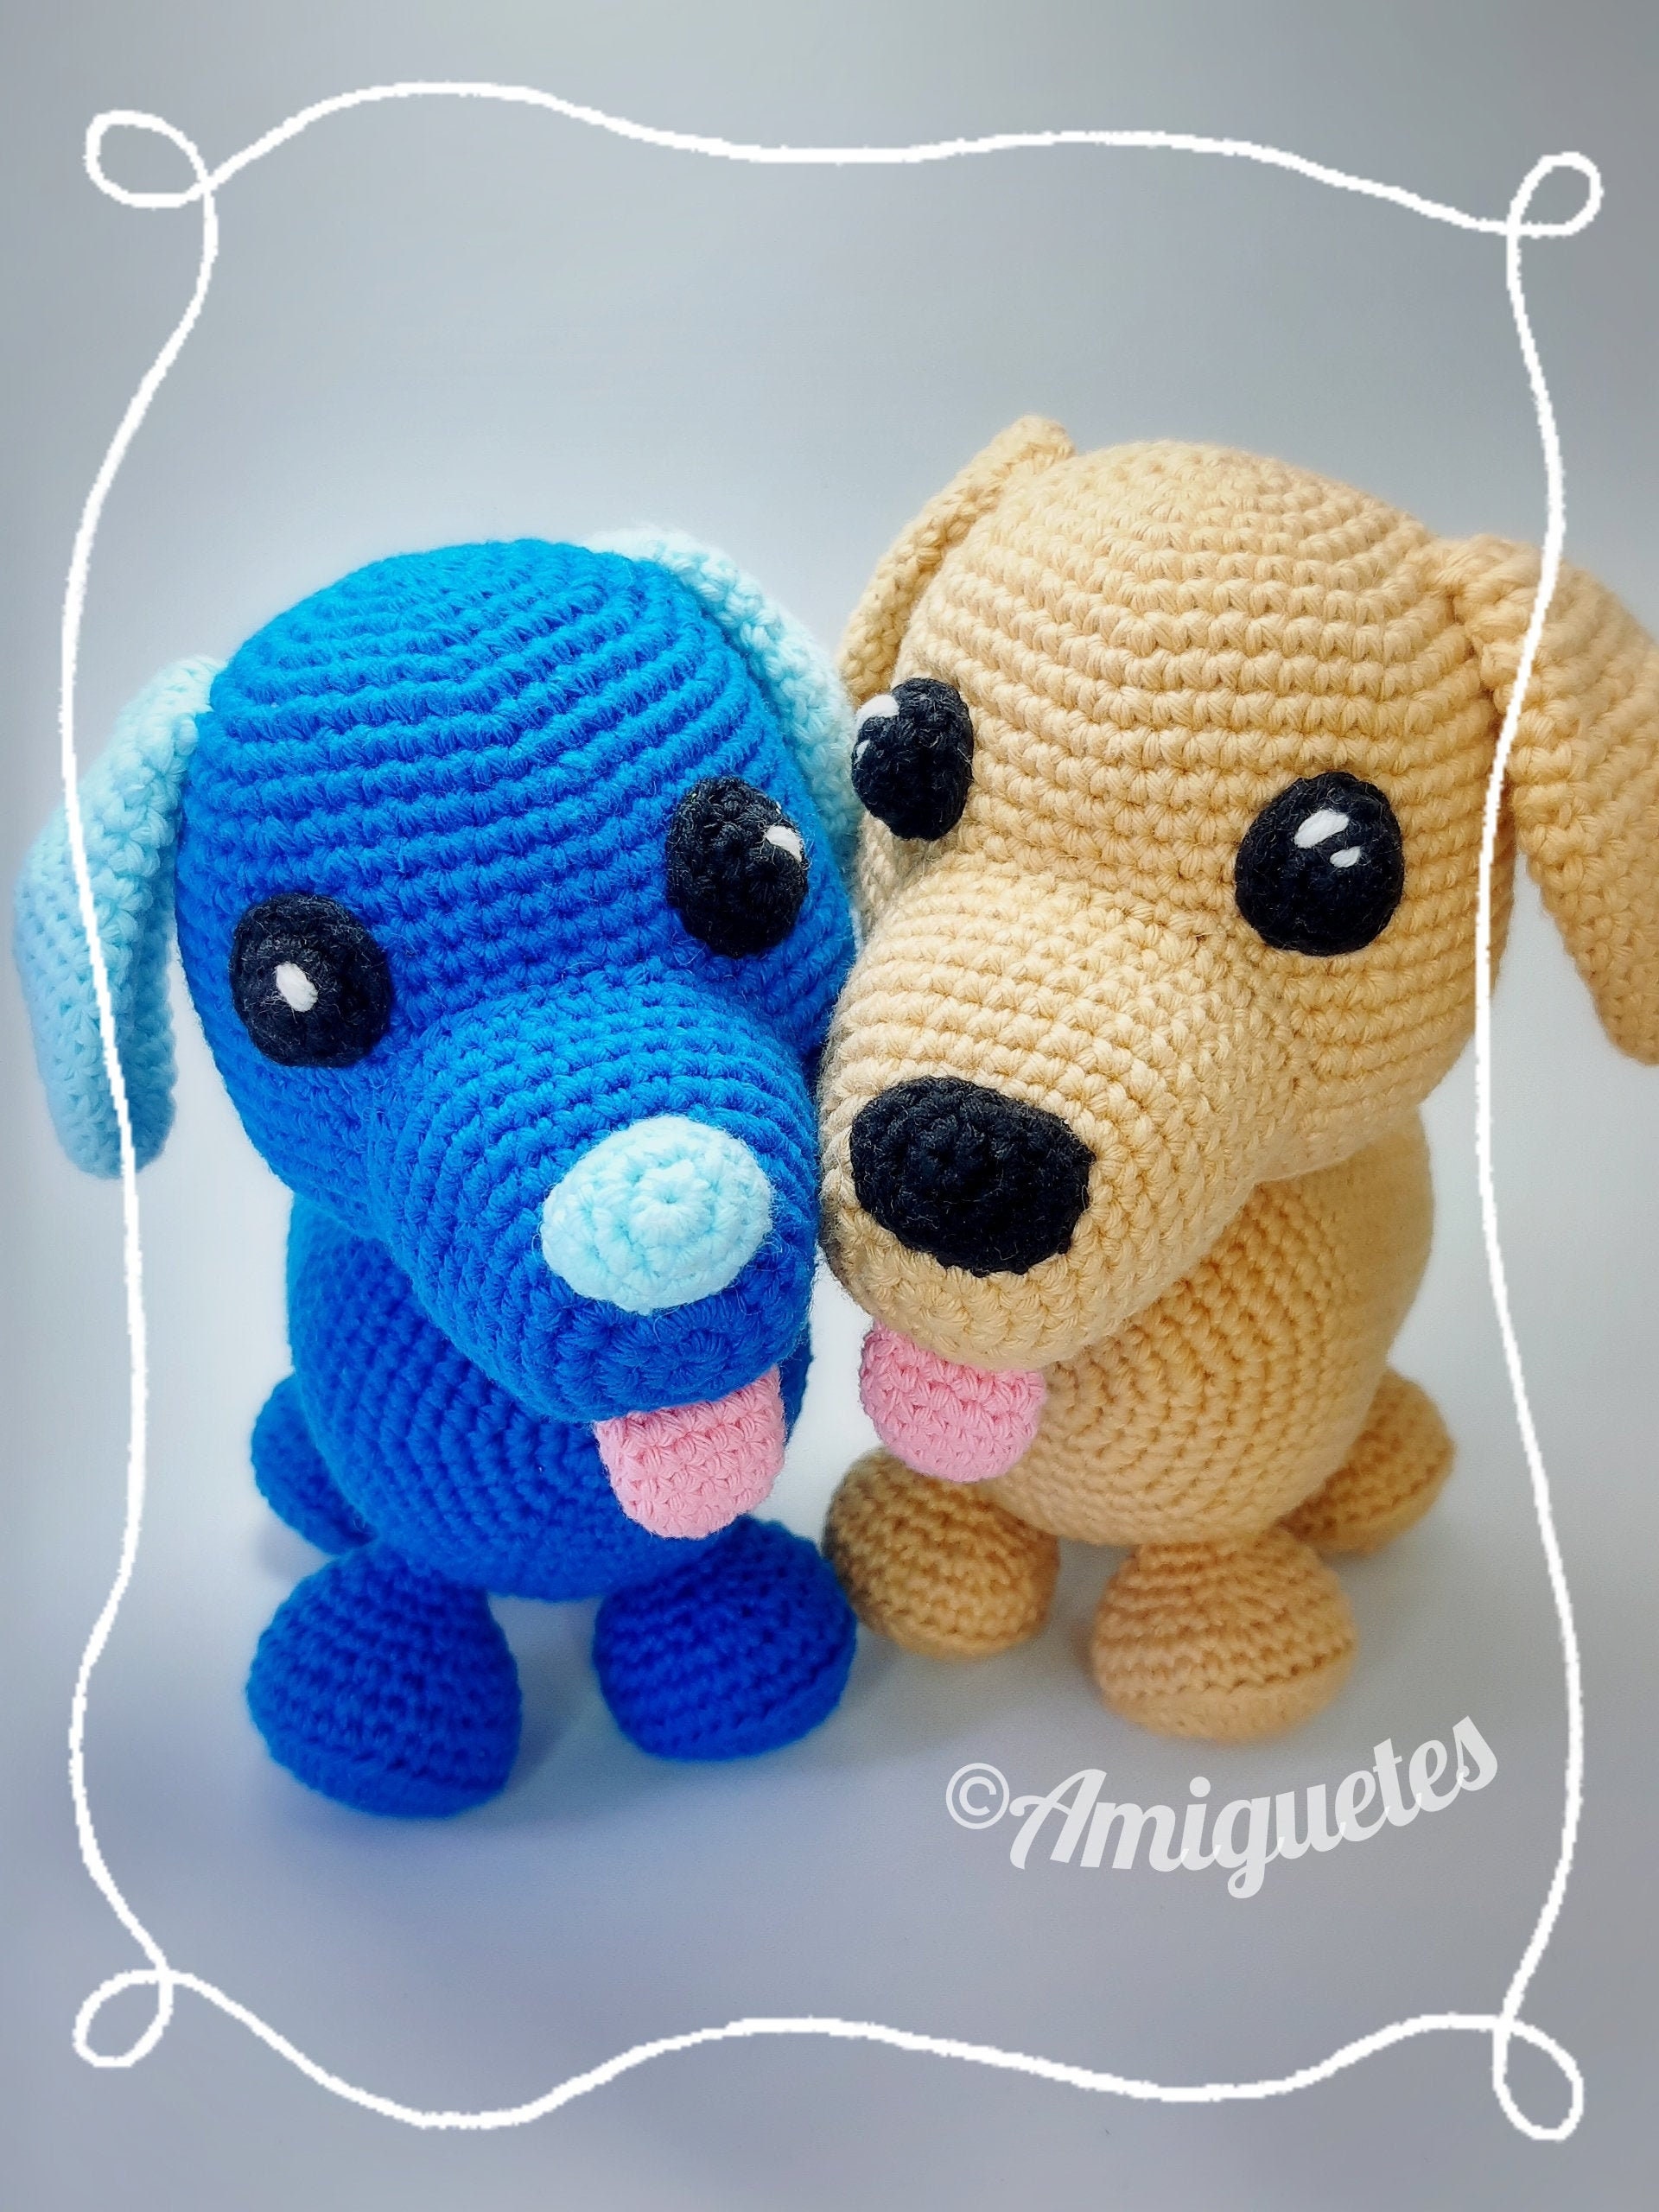 6pcs Adopt Me Pets Plush Rescue Animal Series Stuffed Plushie Toy Doll Kids  Gift